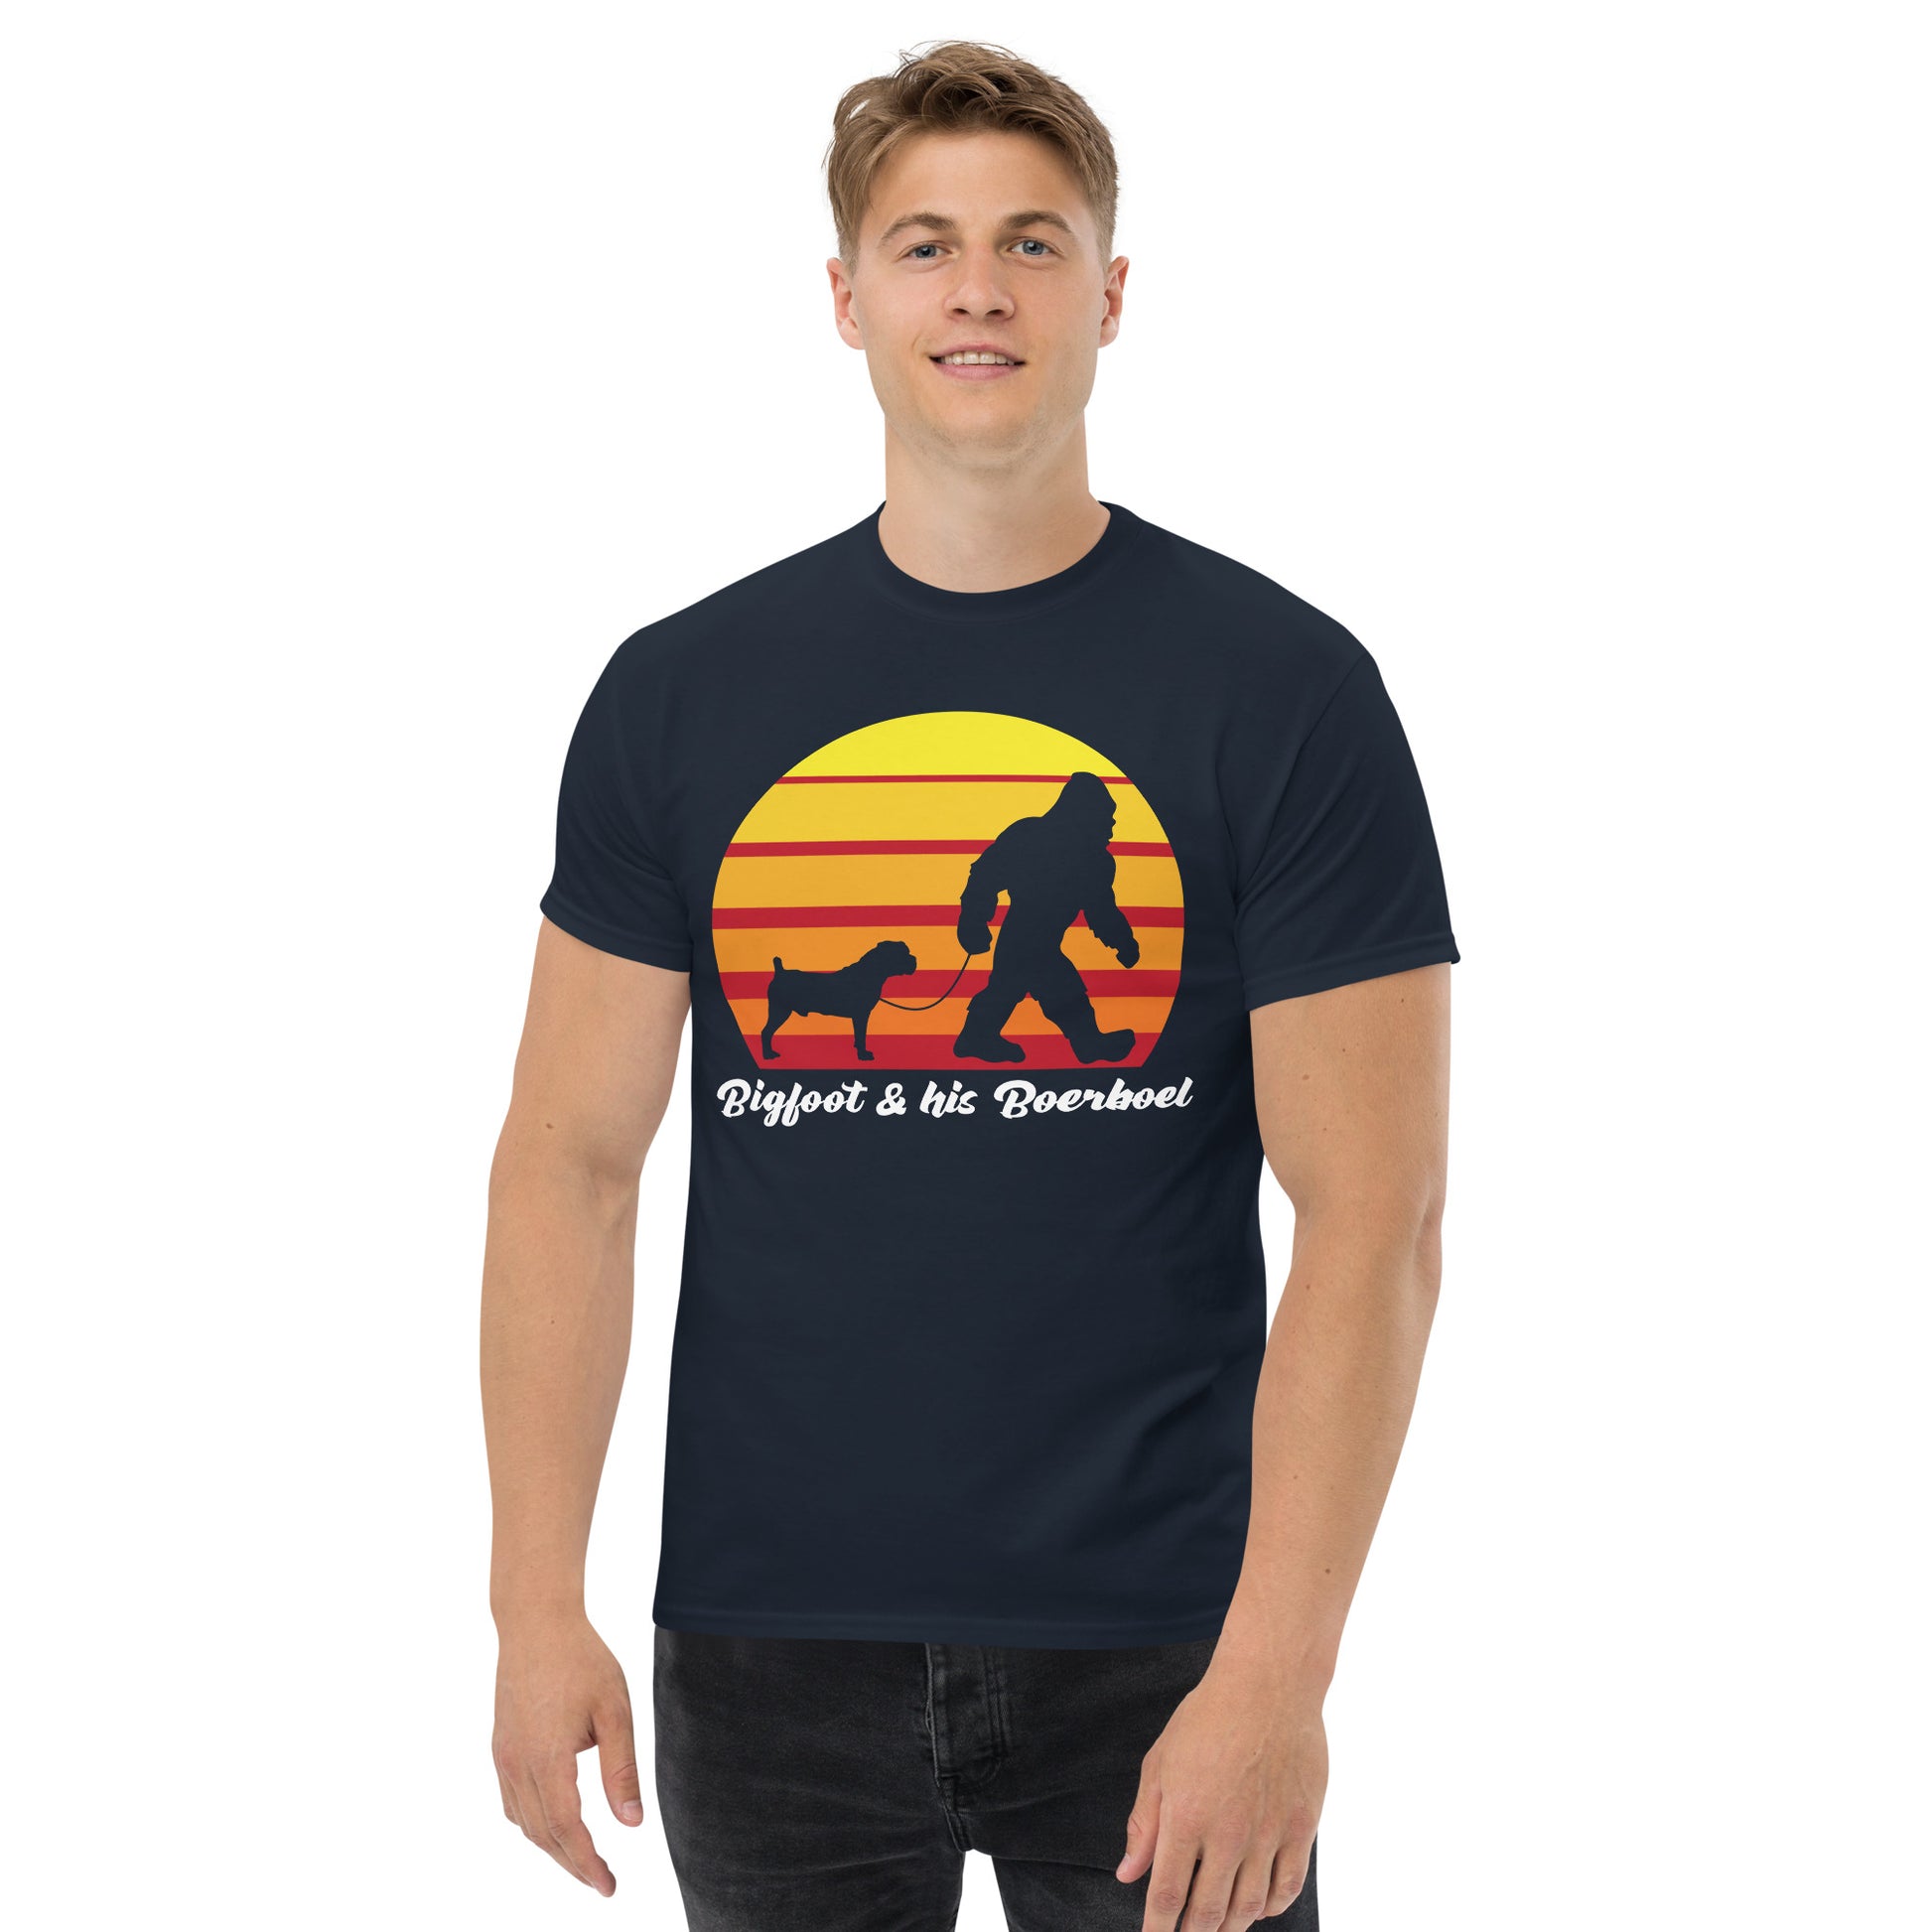 Big foot and his Boerboel men’s navy t-shirt by Dog Artistry.